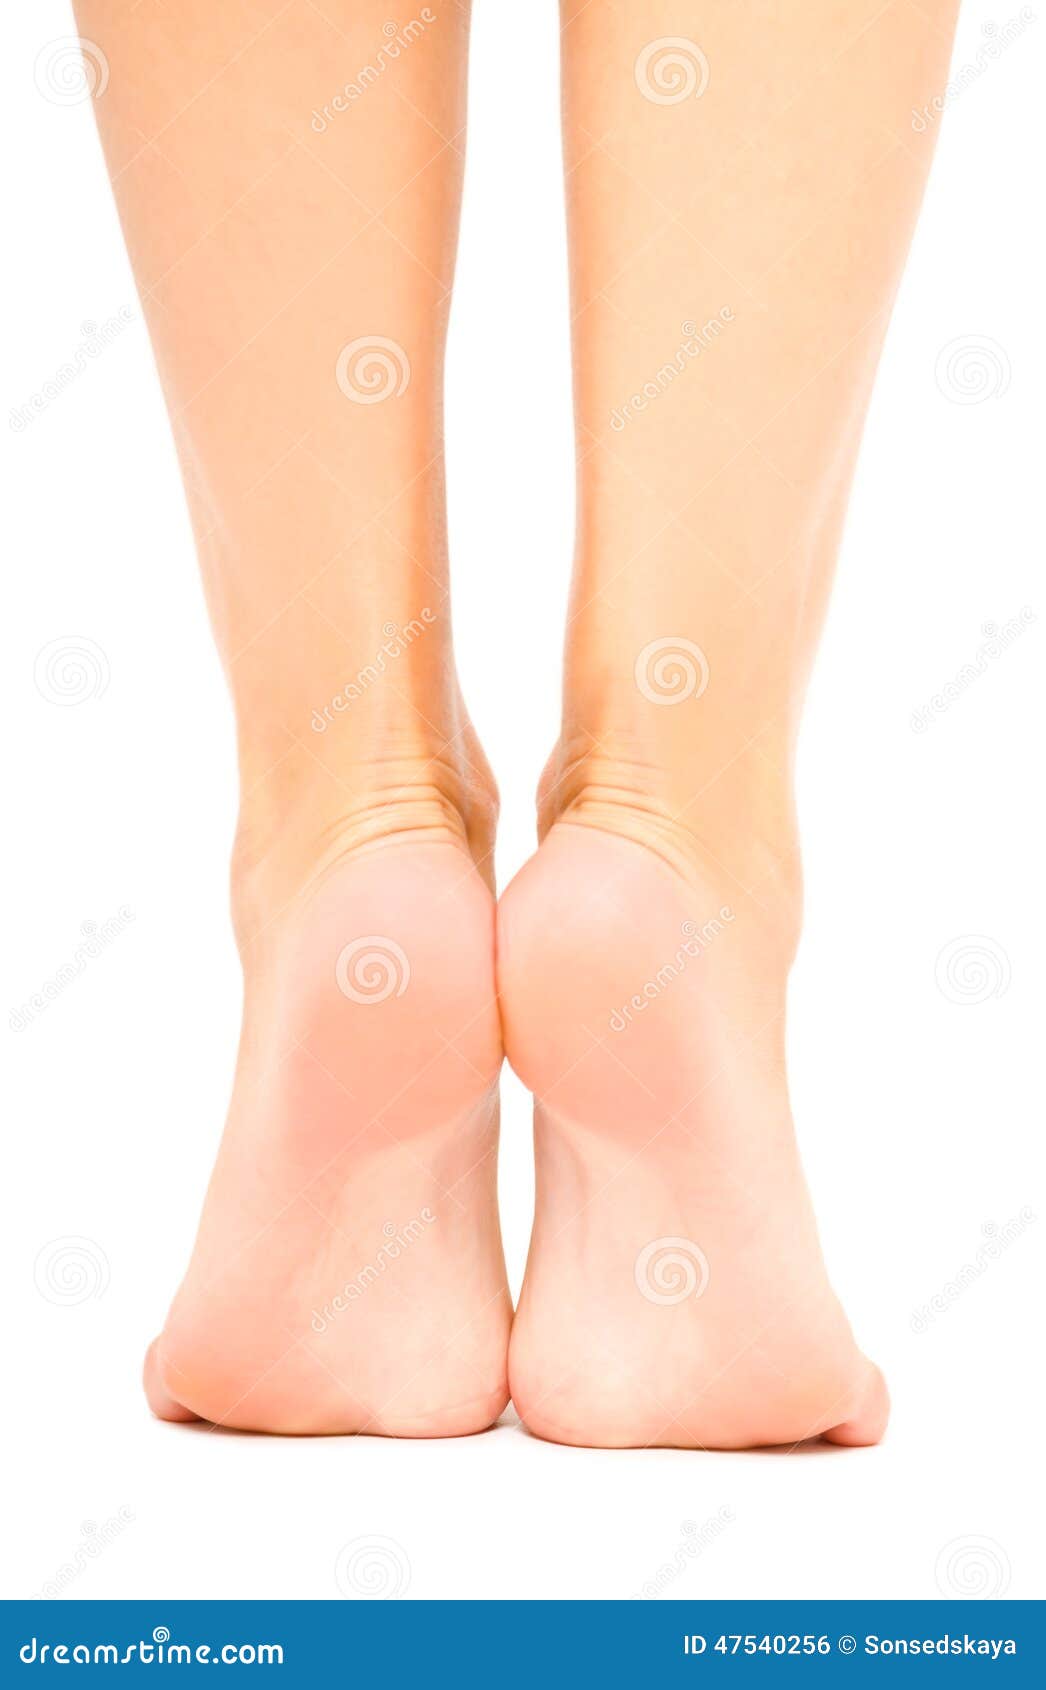 well-groomed female foot